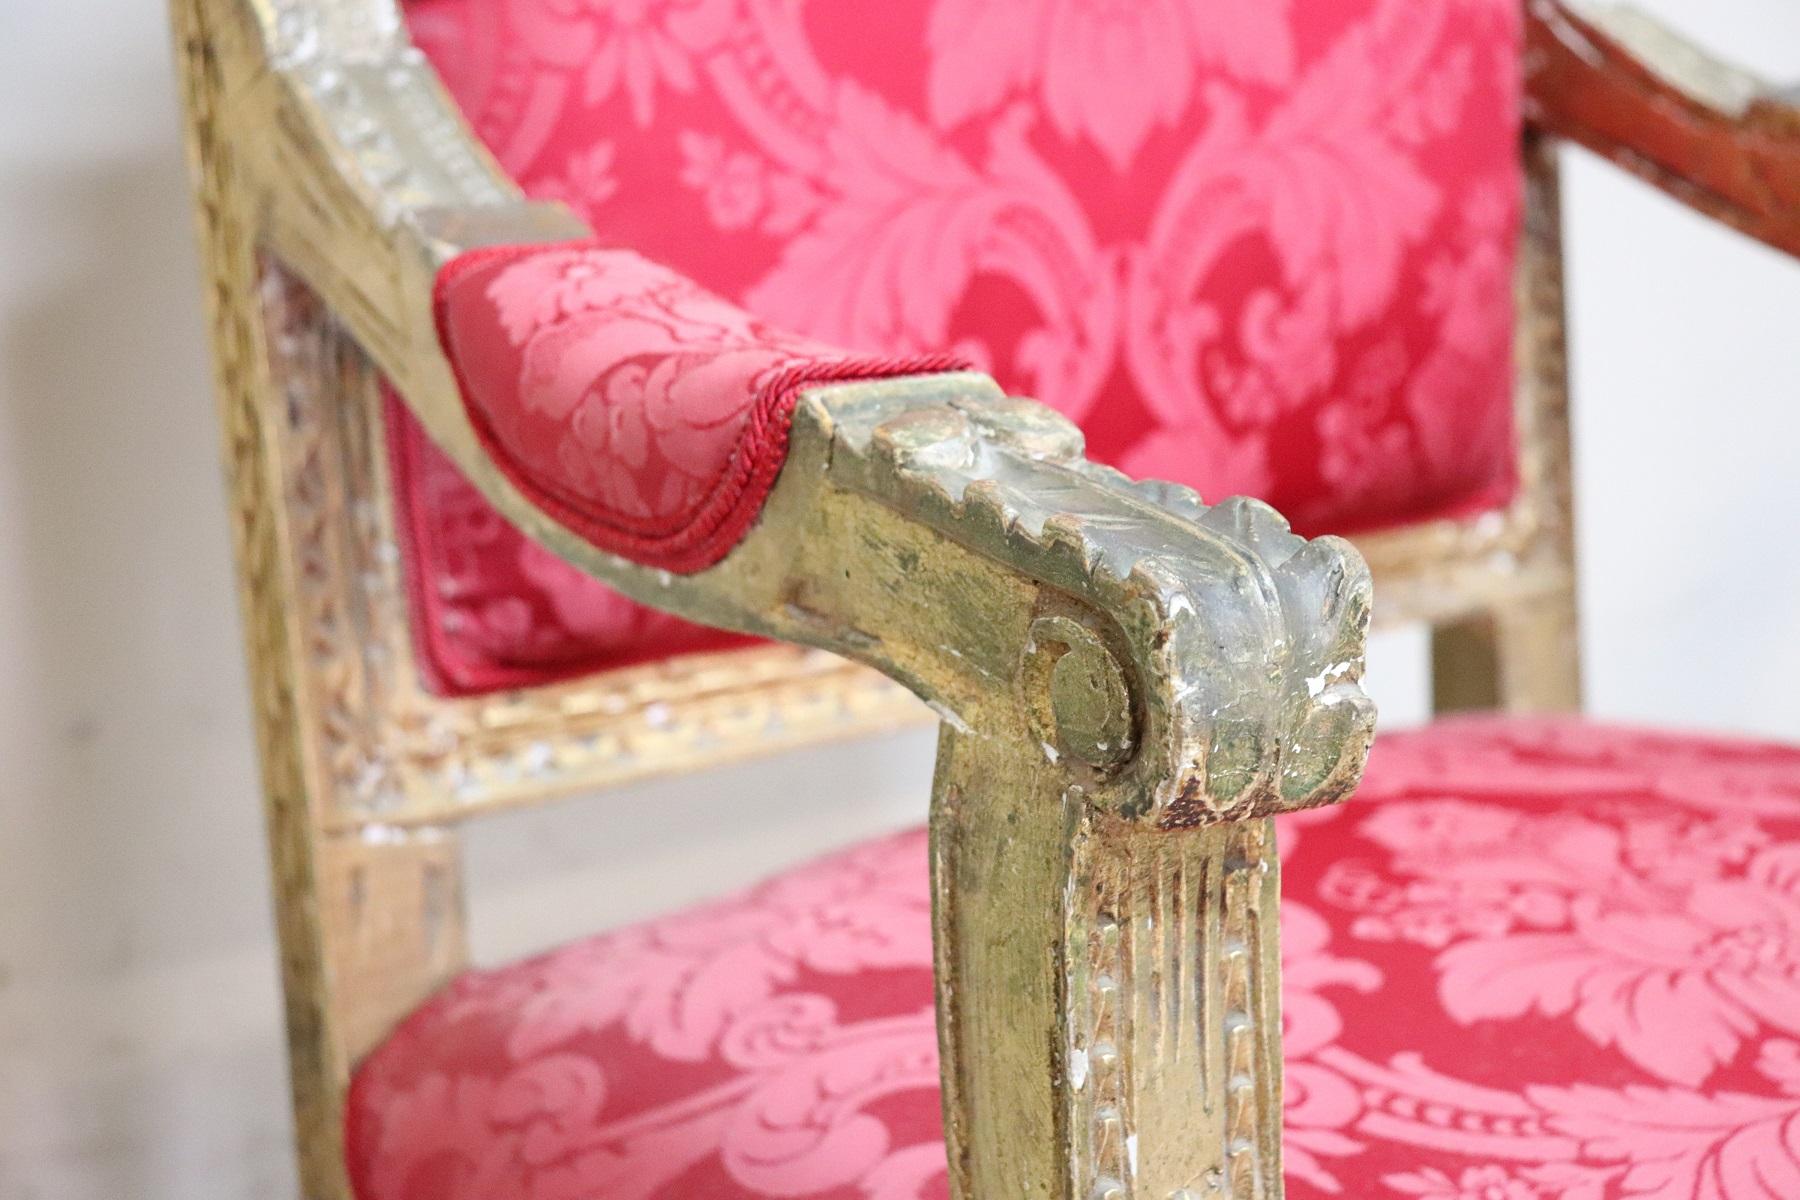 Mid-20th Century 20th Century Italian Baroque Style Gilded Wood Pair of Armchairs